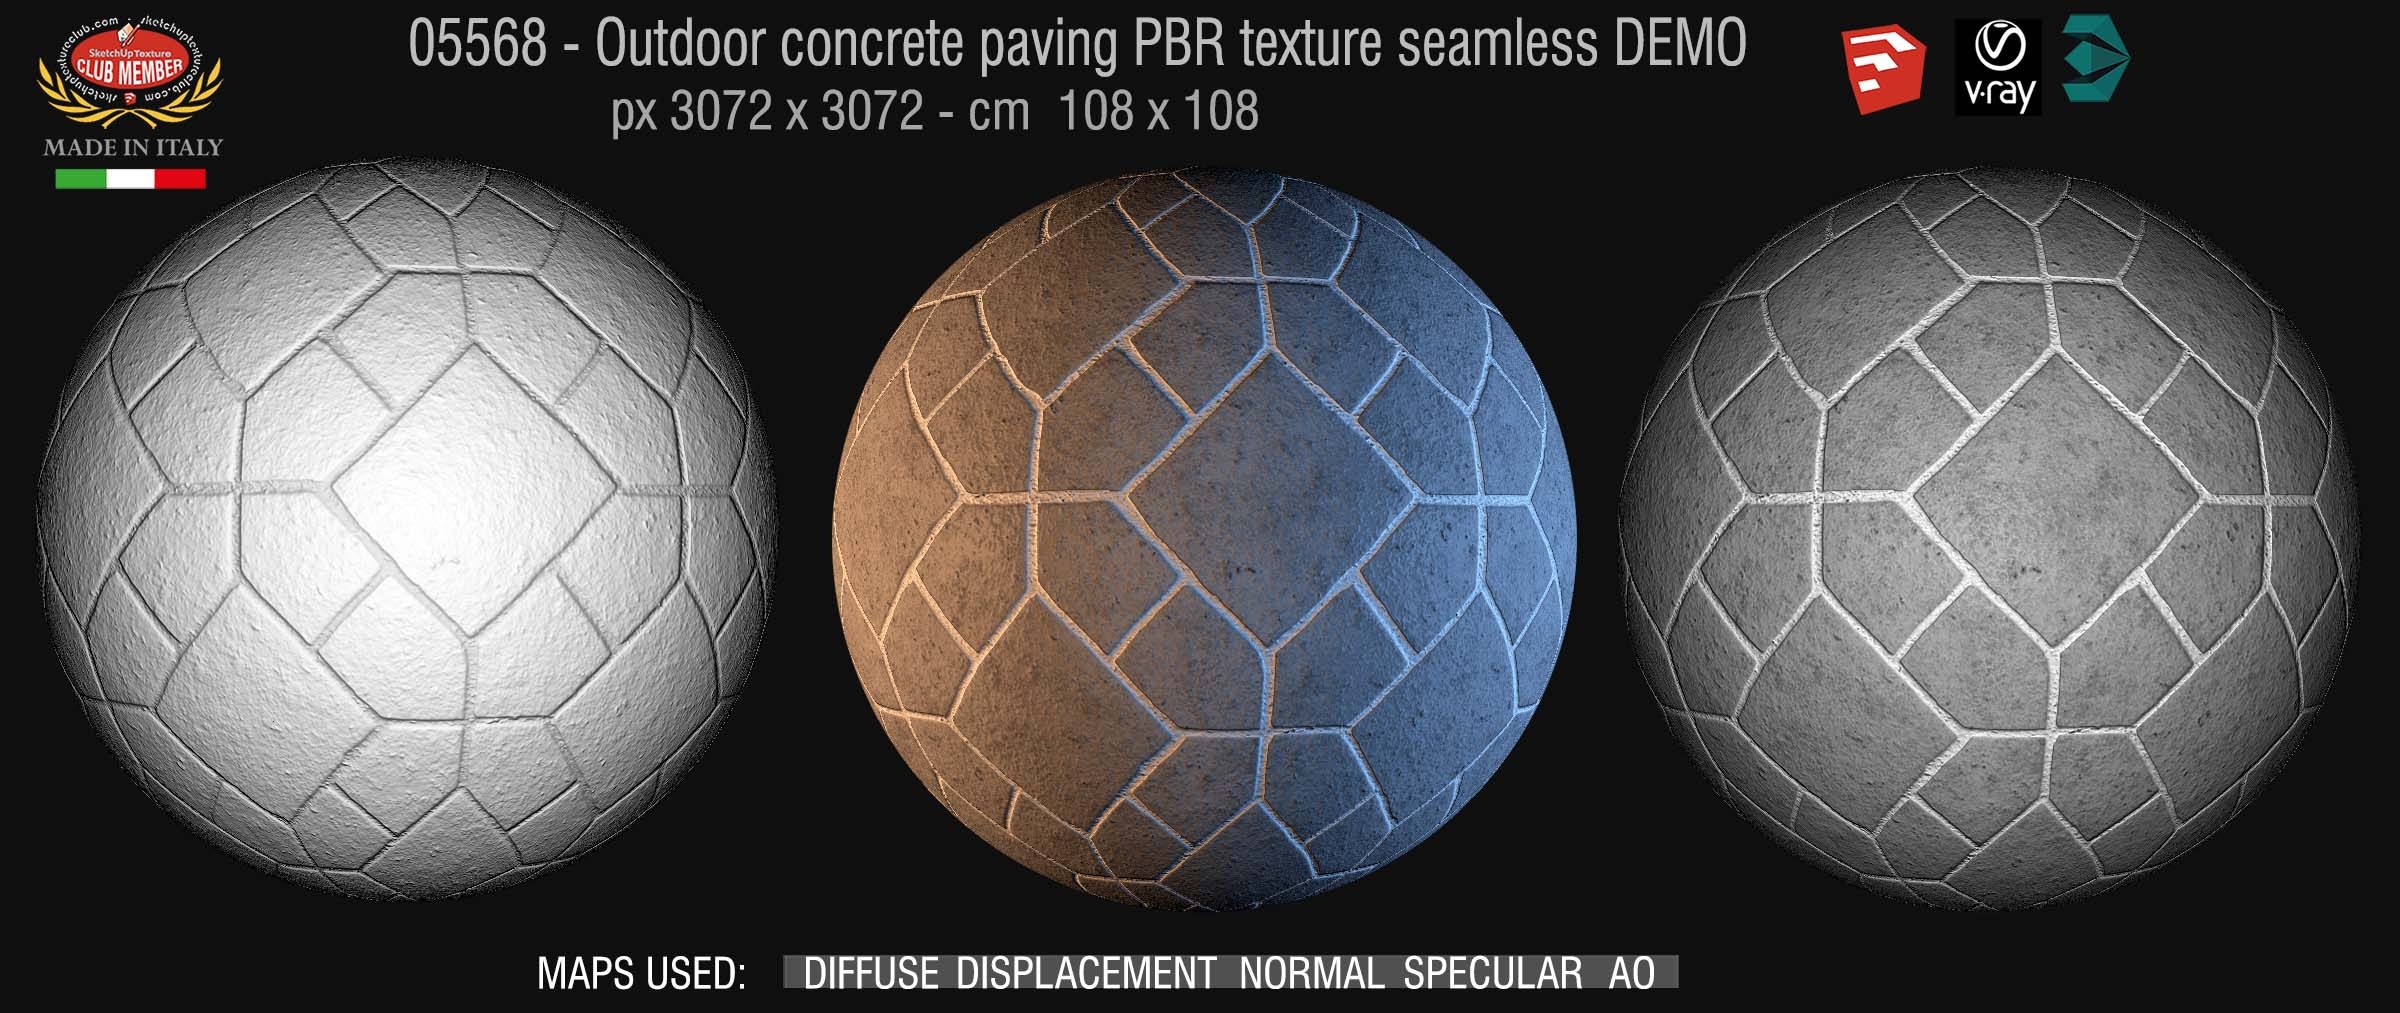 05568 Outdoor concrete paving PBR texture seamless DEMO